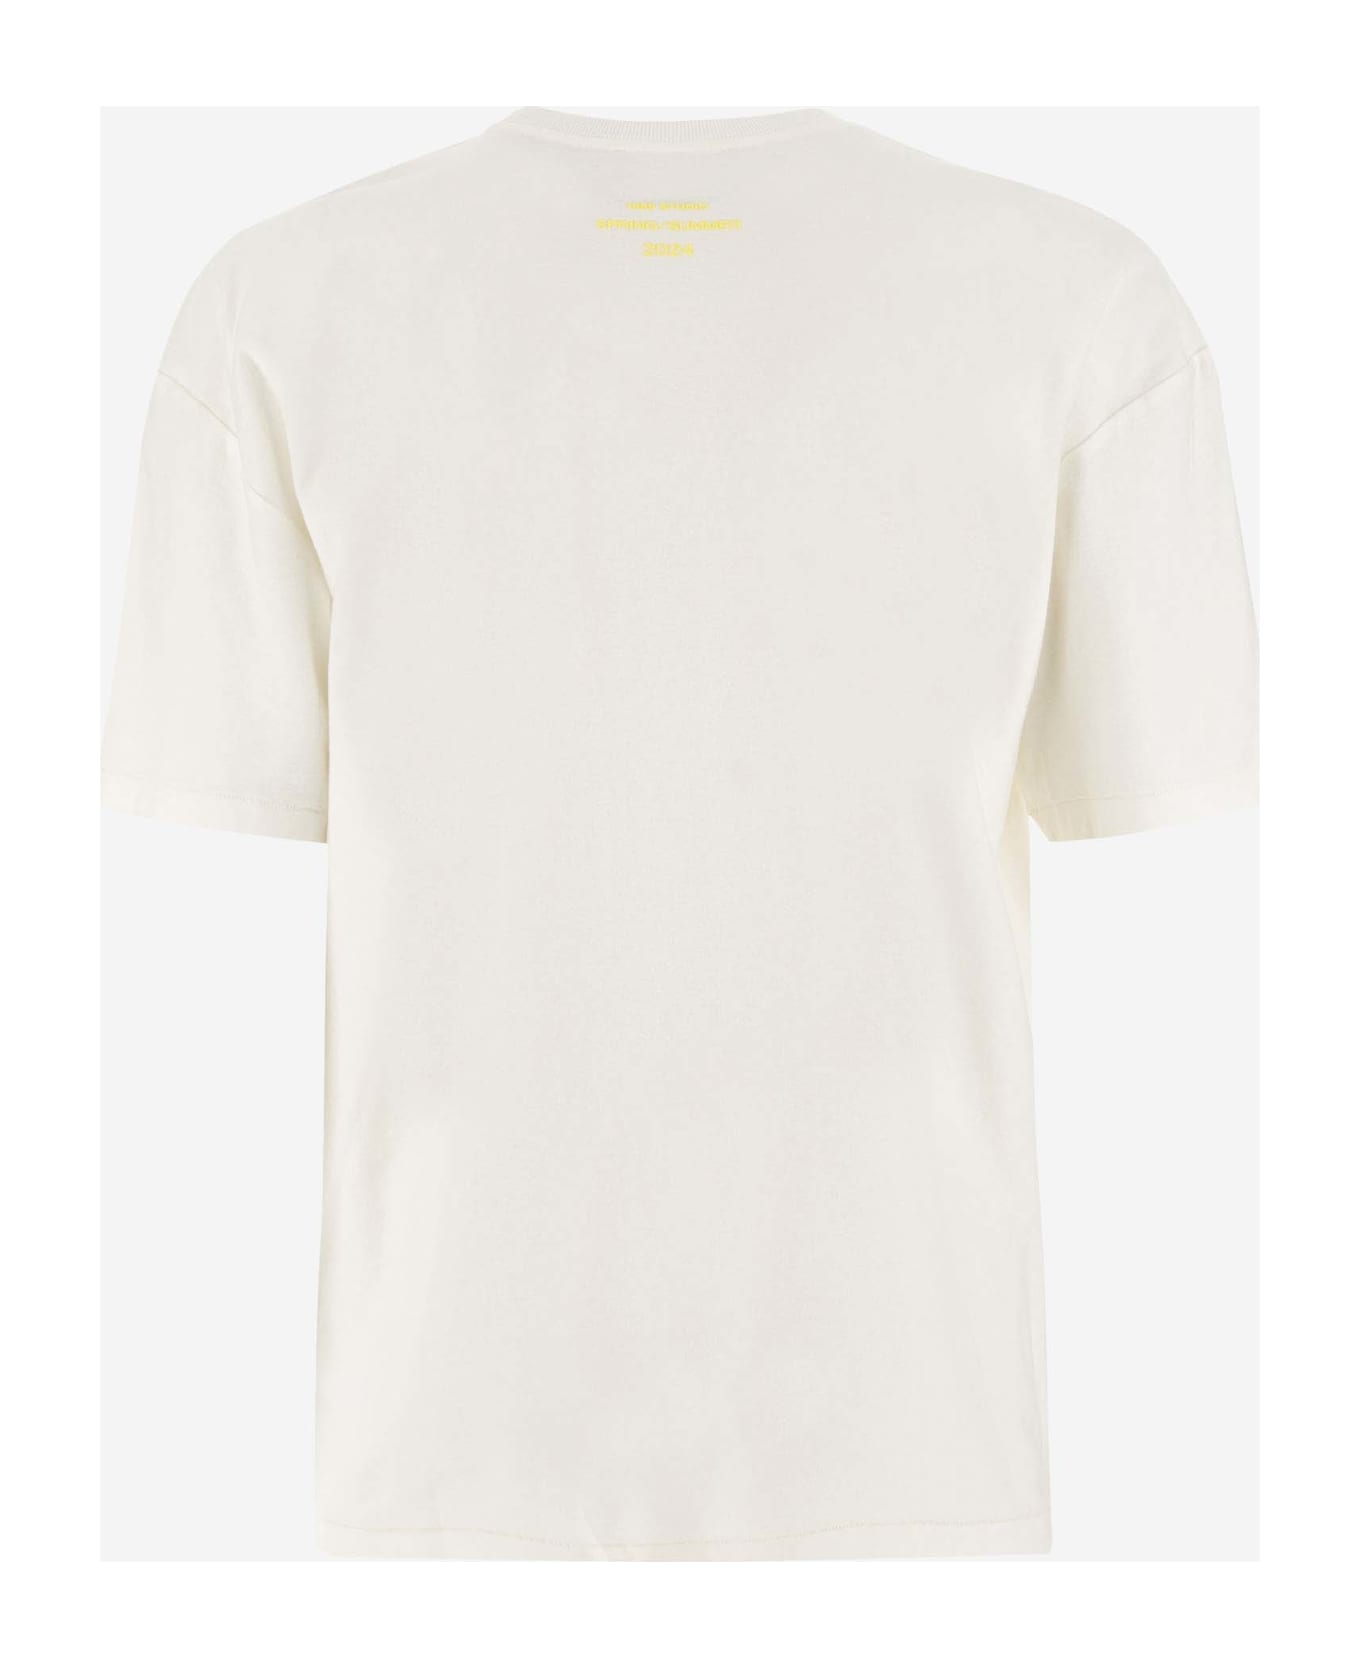 1989 Studio Cotton T-shirt With Graphic Print - White